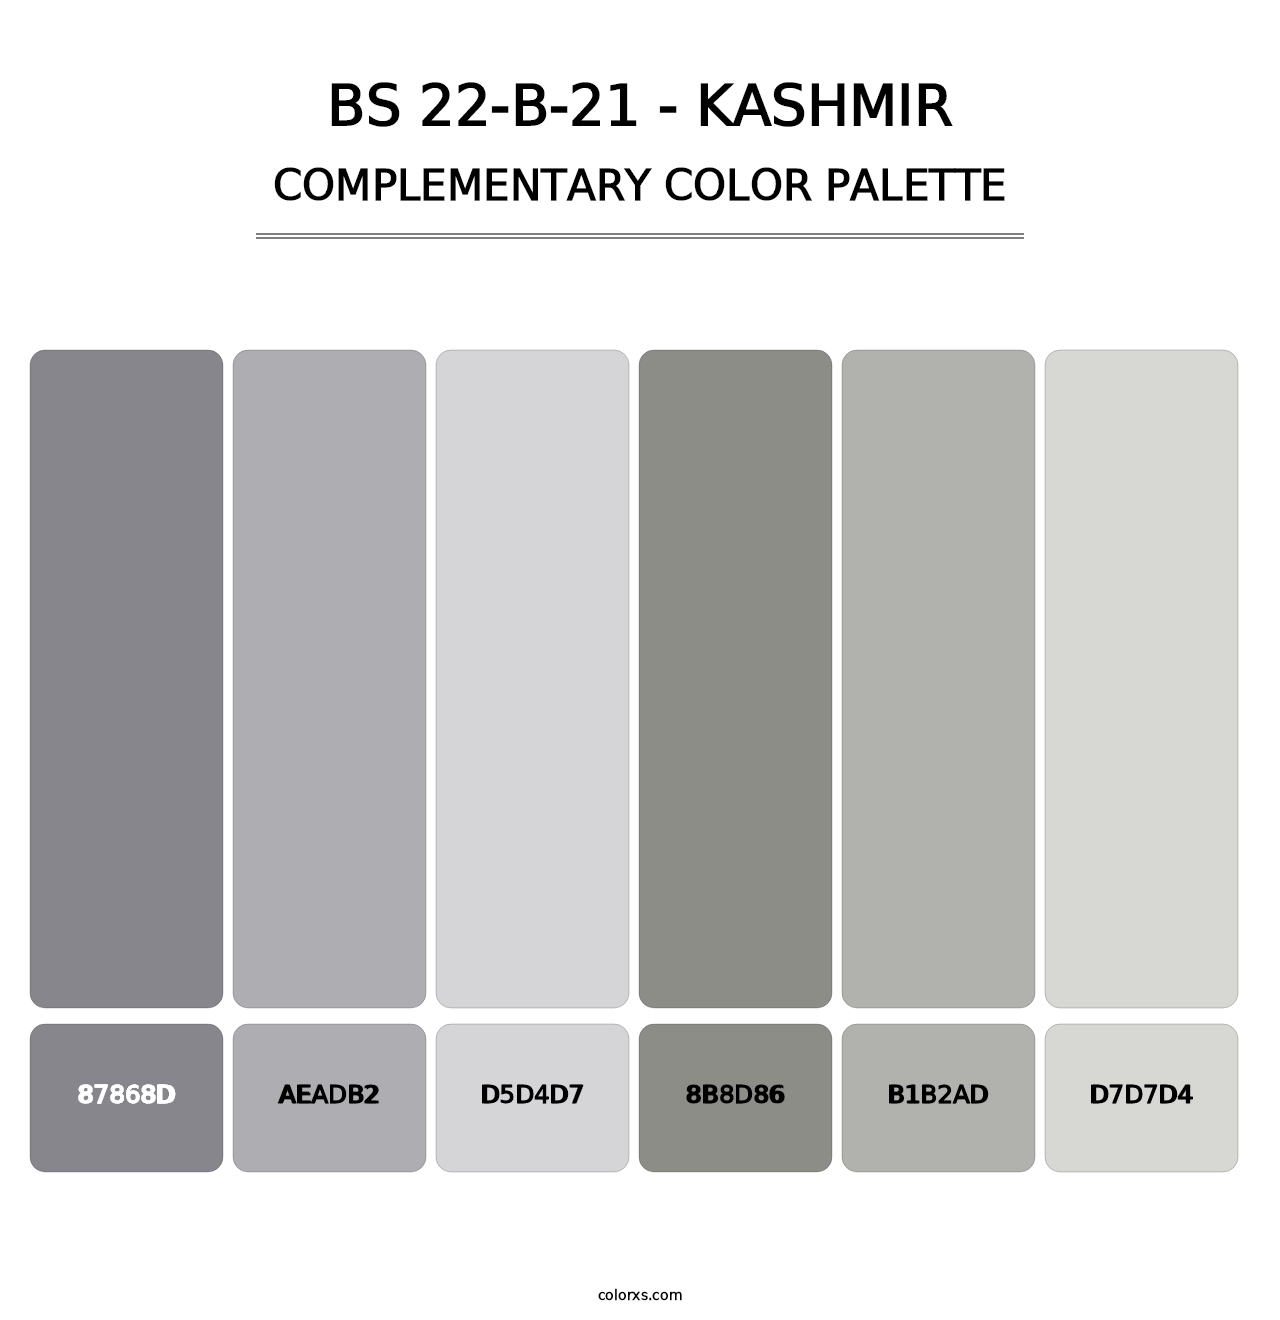 BS 22-B-21 - Kashmir - Complementary Color Palette